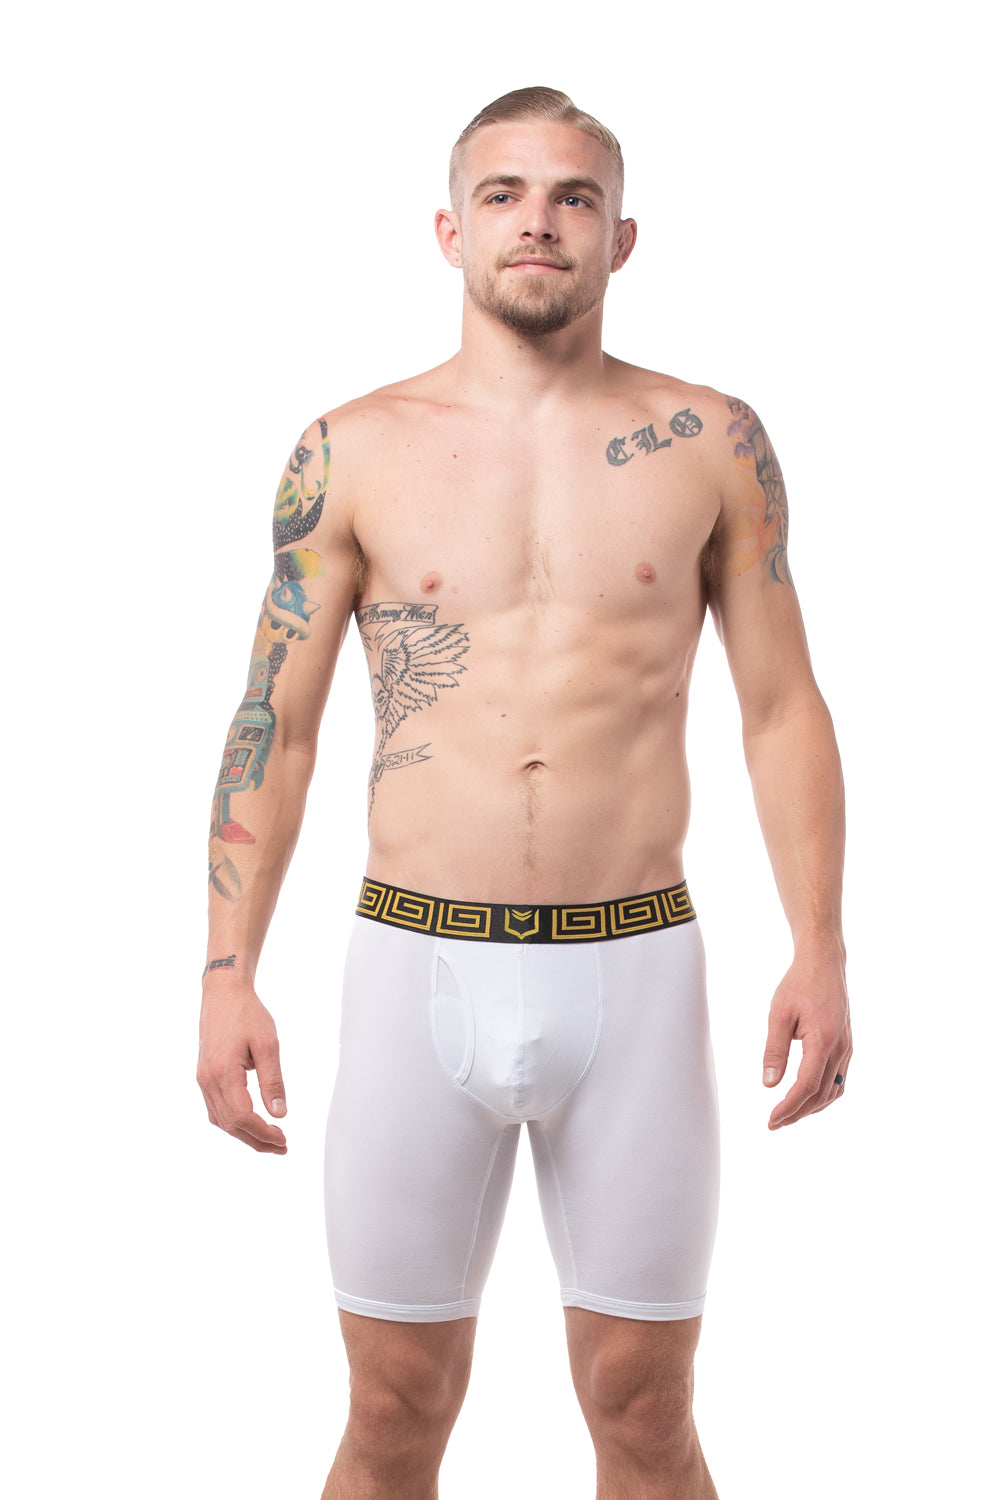 SHEATH - SHEATH Underwear // Battle Ready 🥊 Gear up:  sheathunderwear.com/collections/all 📷 UFC strawweight Tecia 'The Tiny  Tornado' Torres